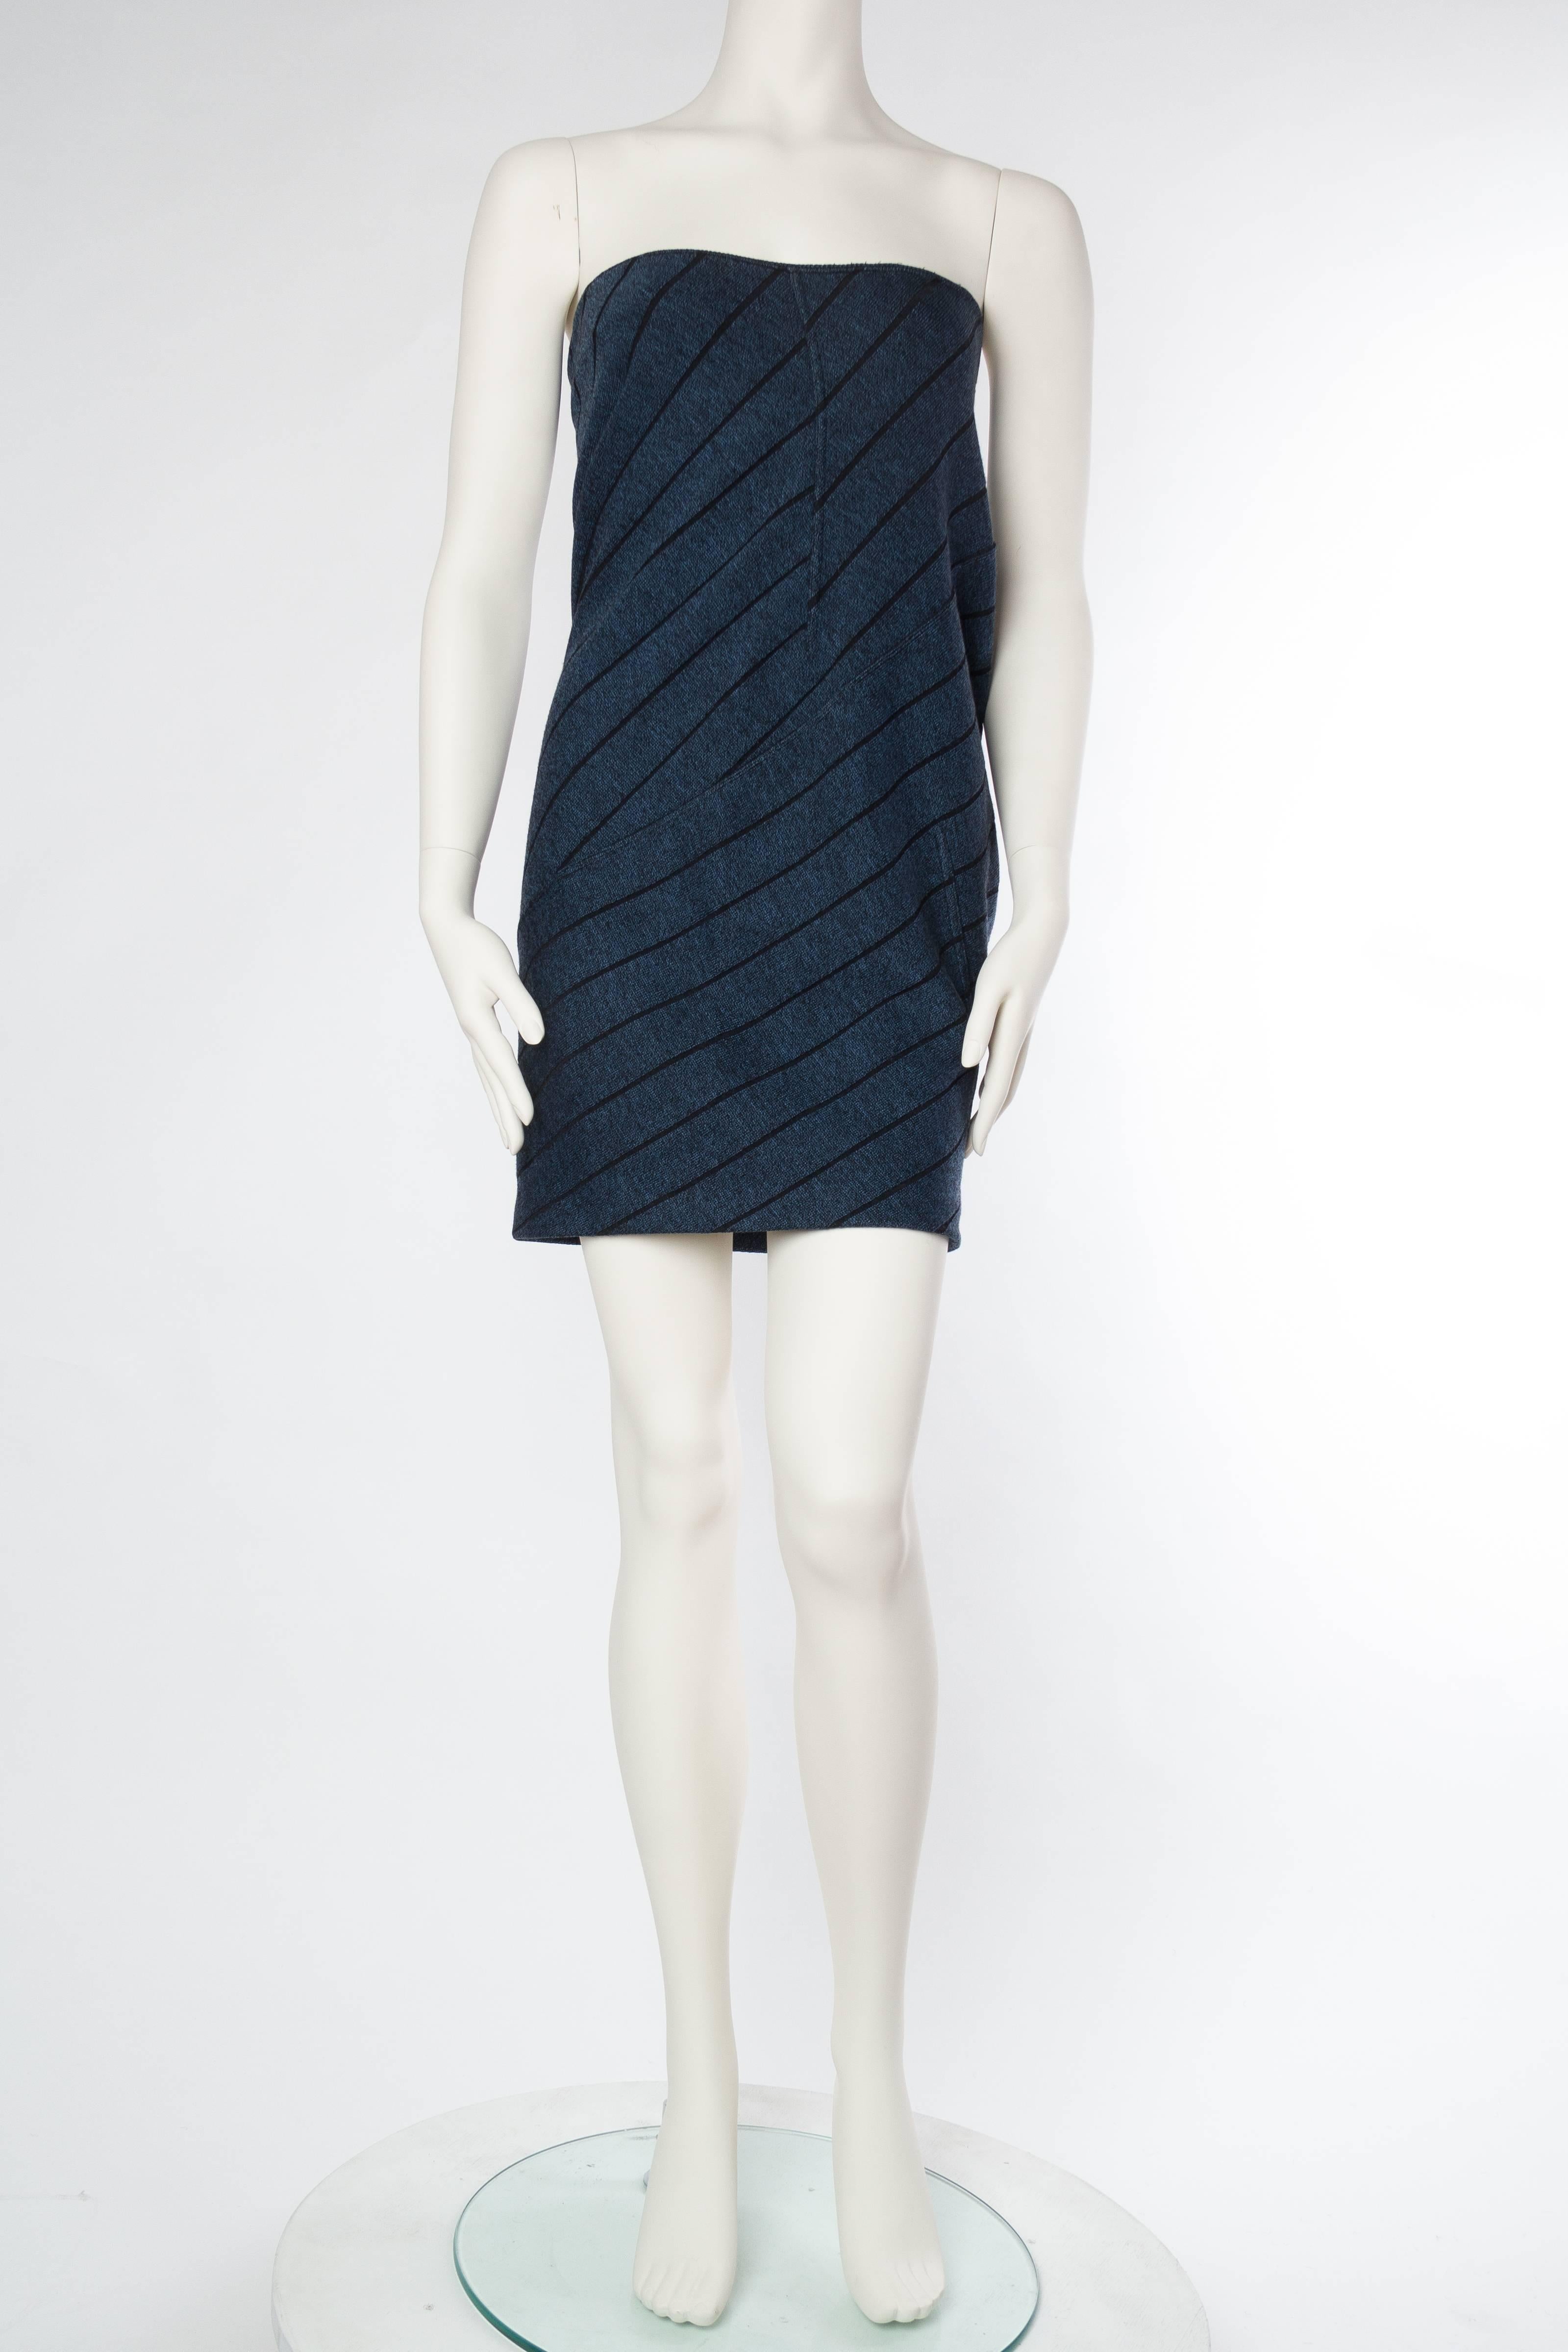 1980S AZZEDINE ALAIA Blue & Black Rayon Blend Knit High-Waisted Skirt For Sale 1